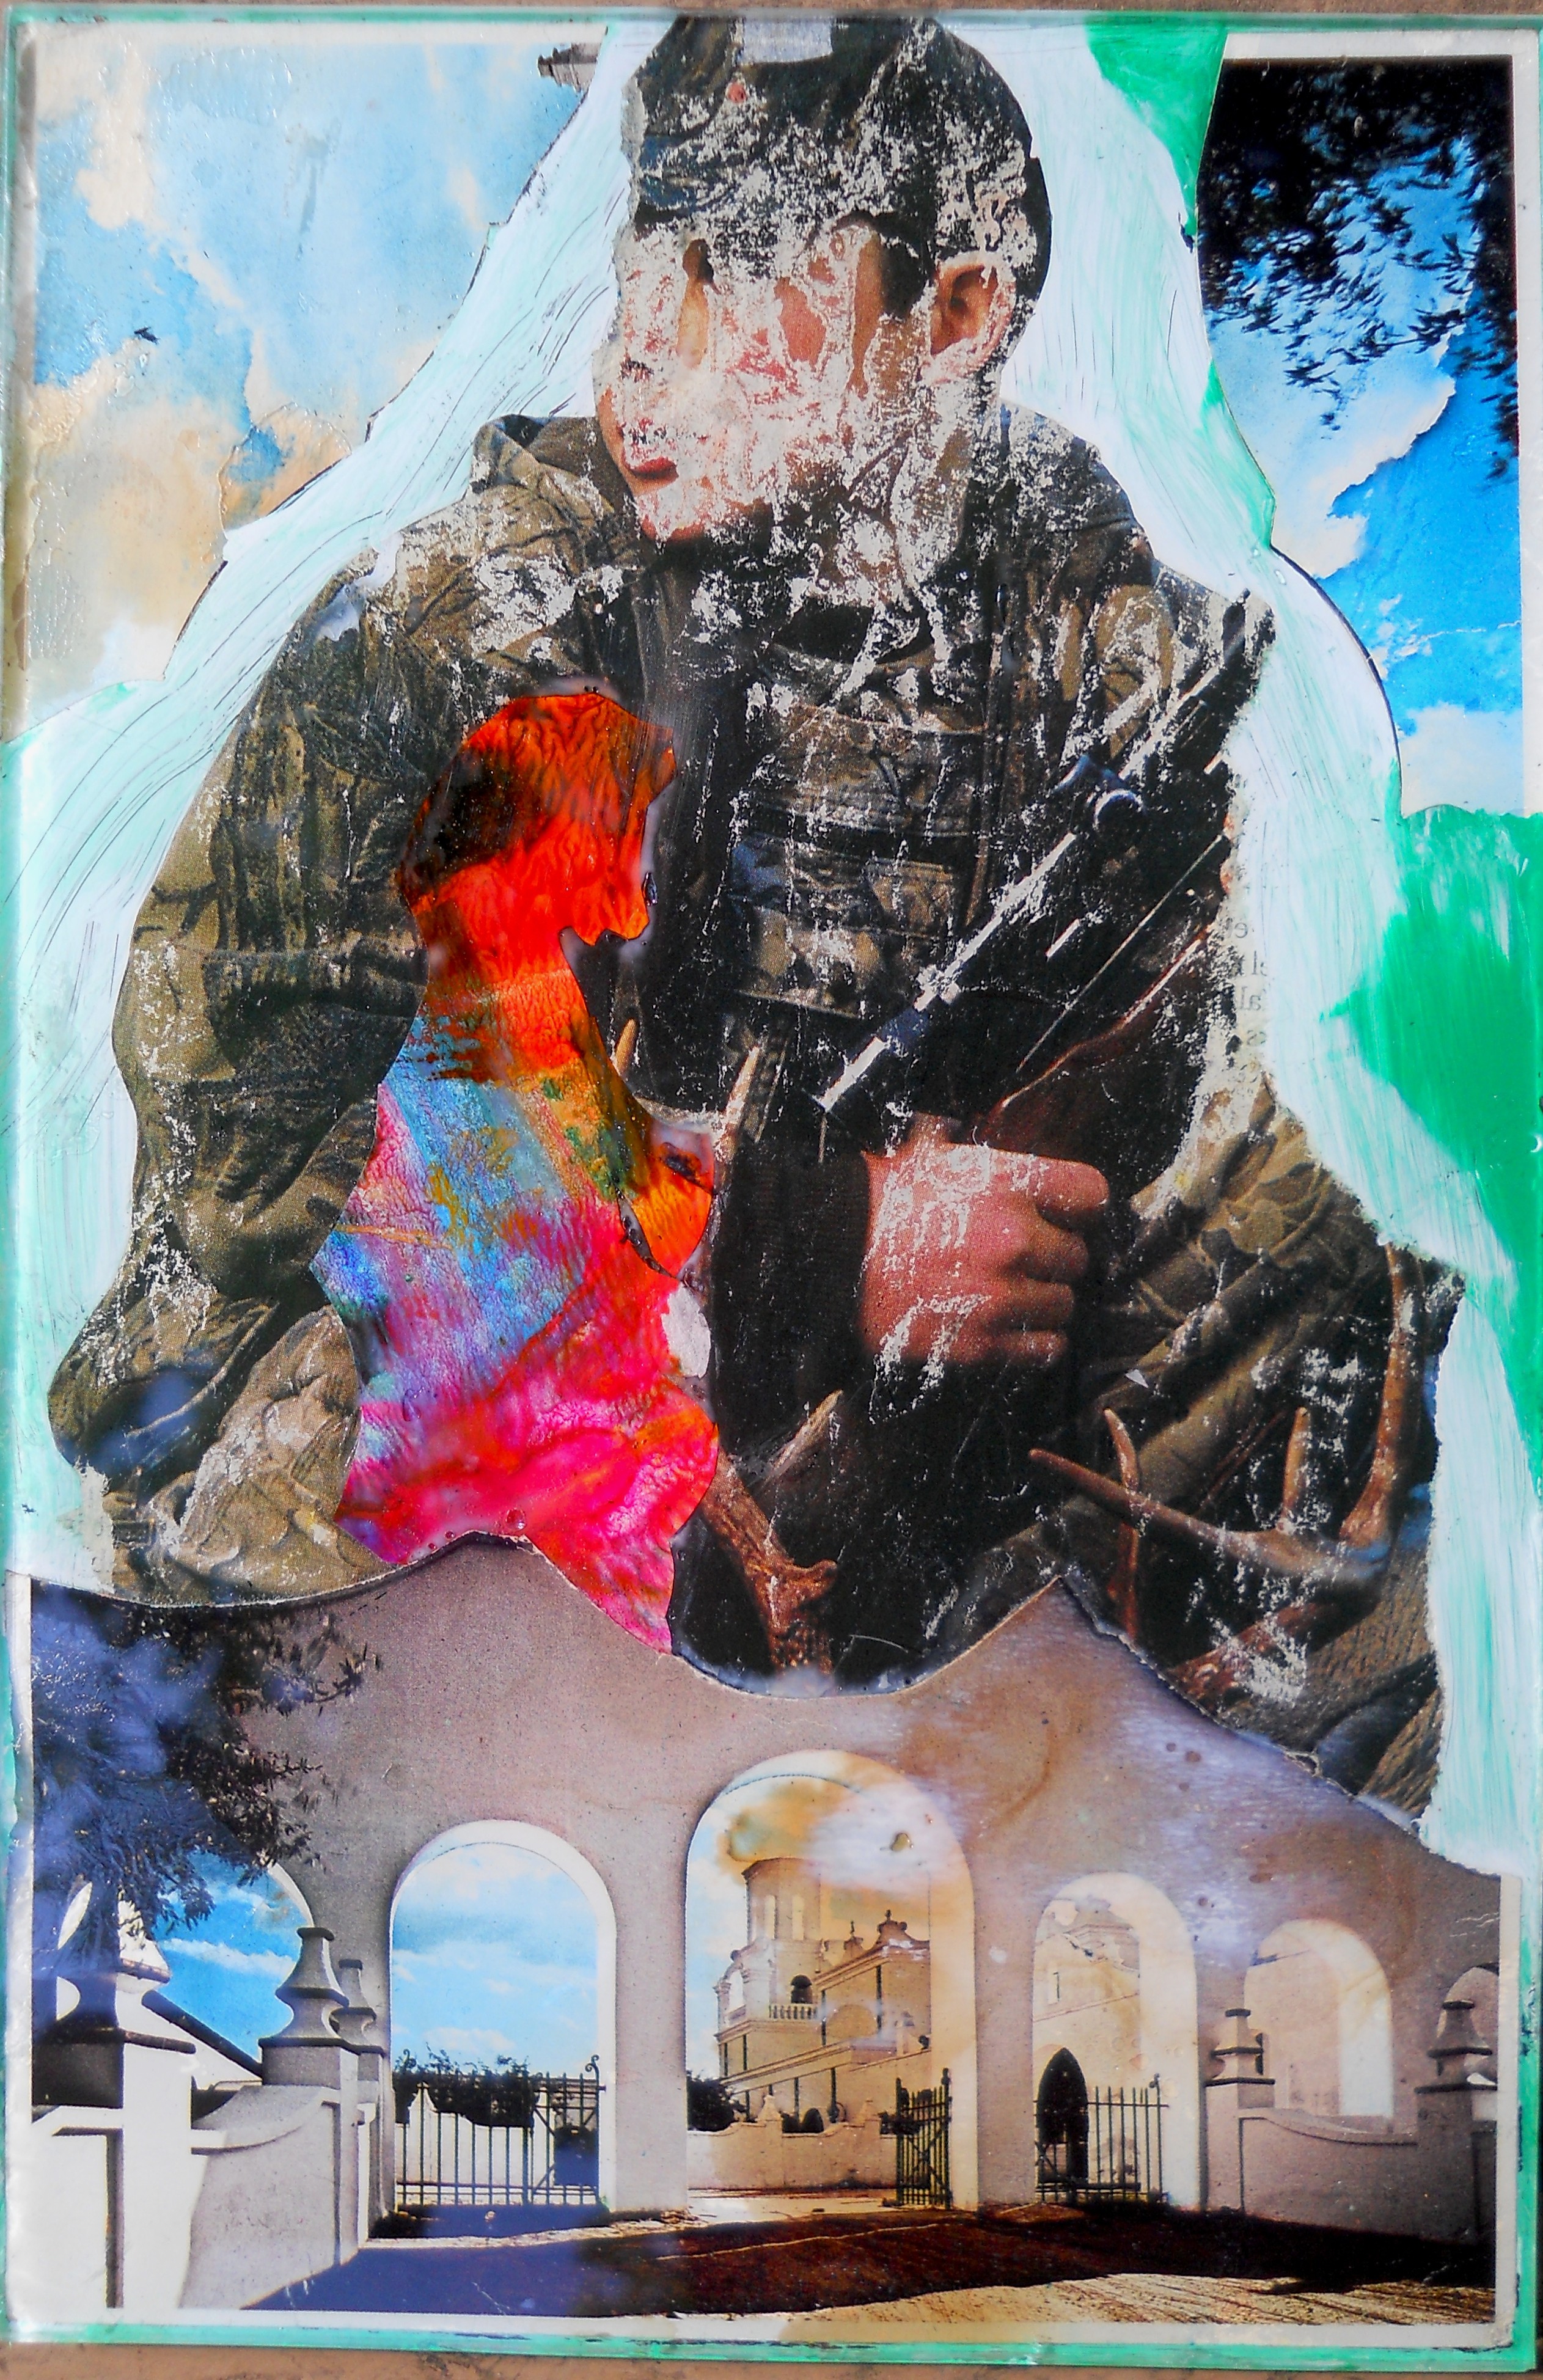 Gunfire; 9 x 6 inches, acrylic and collage on plexiglas, 2012